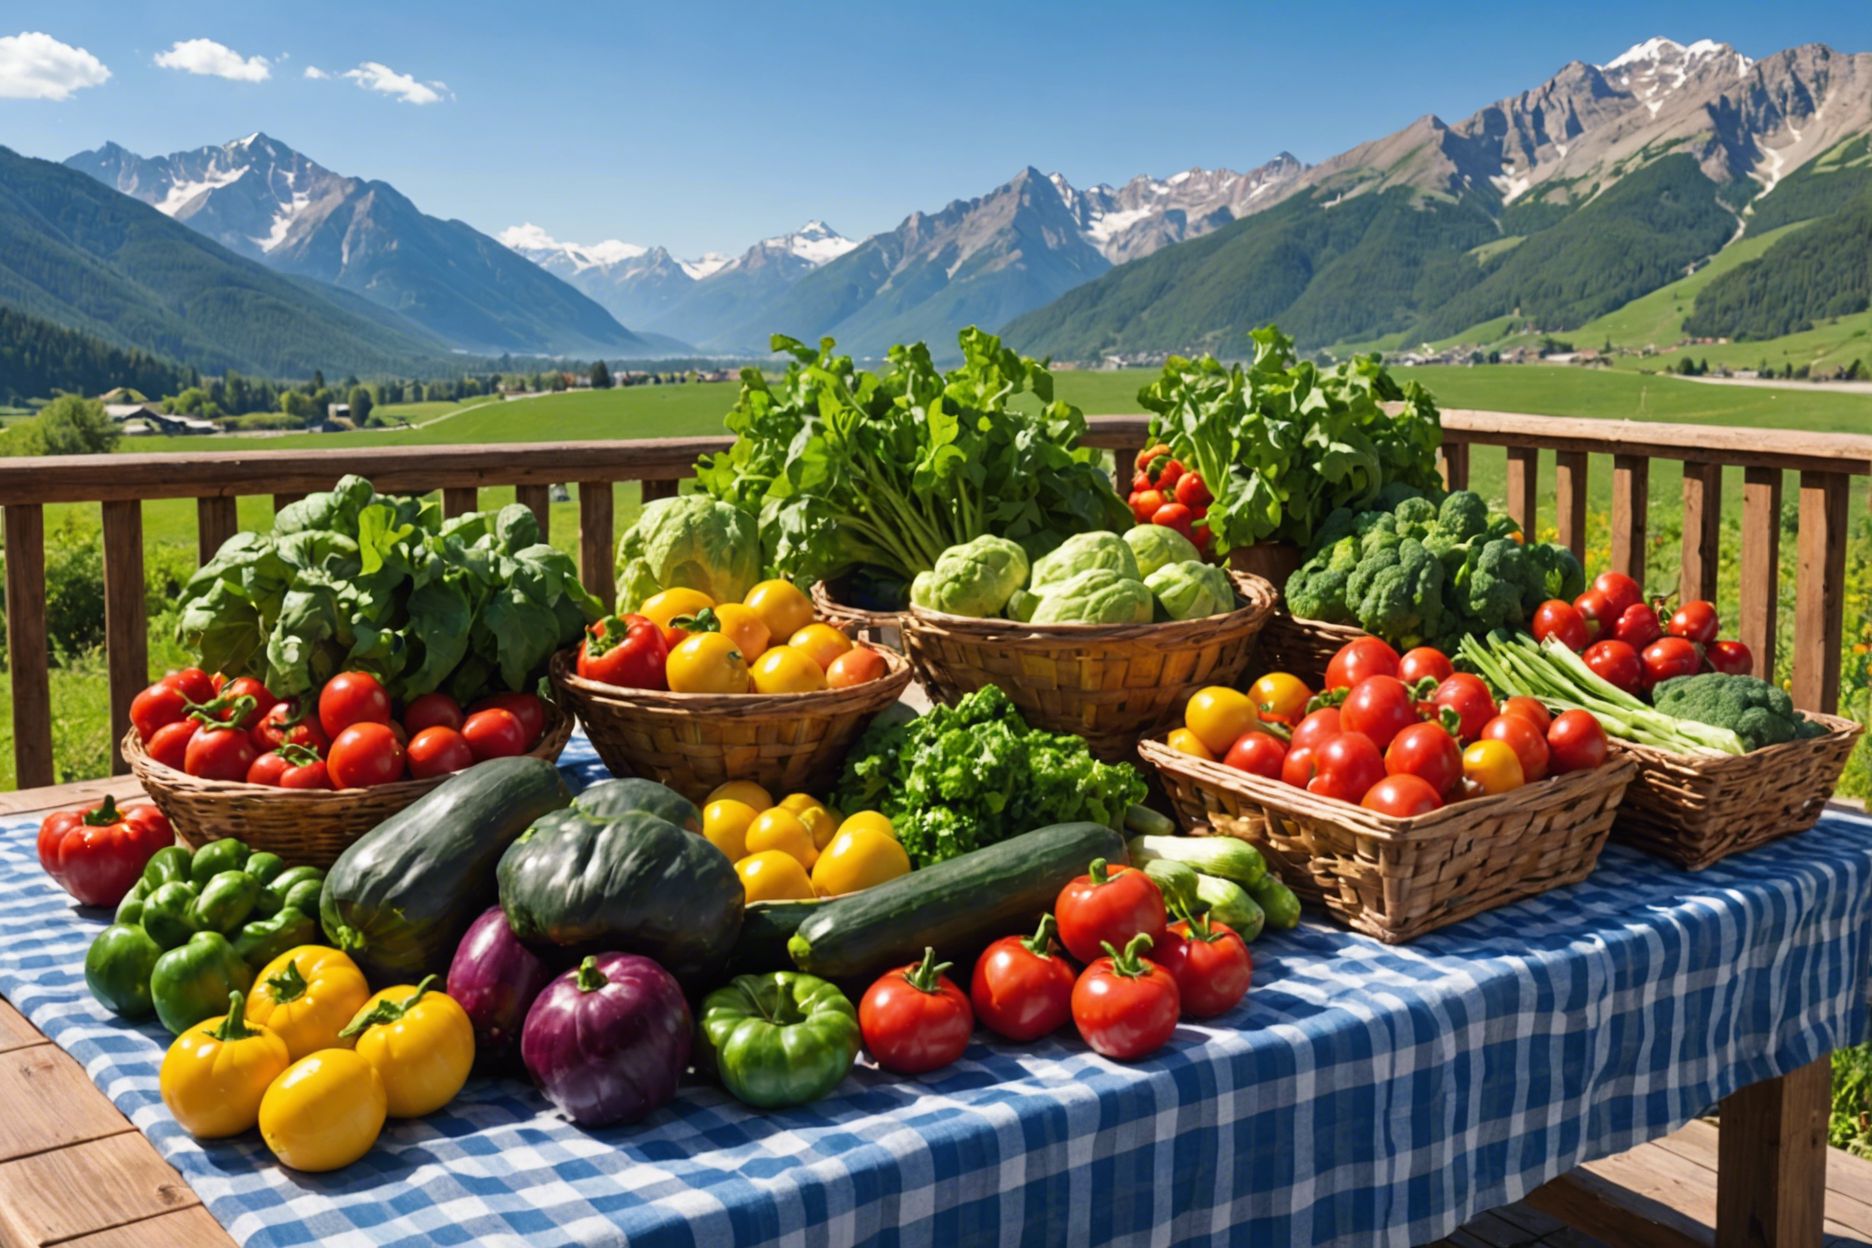 Seasonal Vegetables in Switzerland